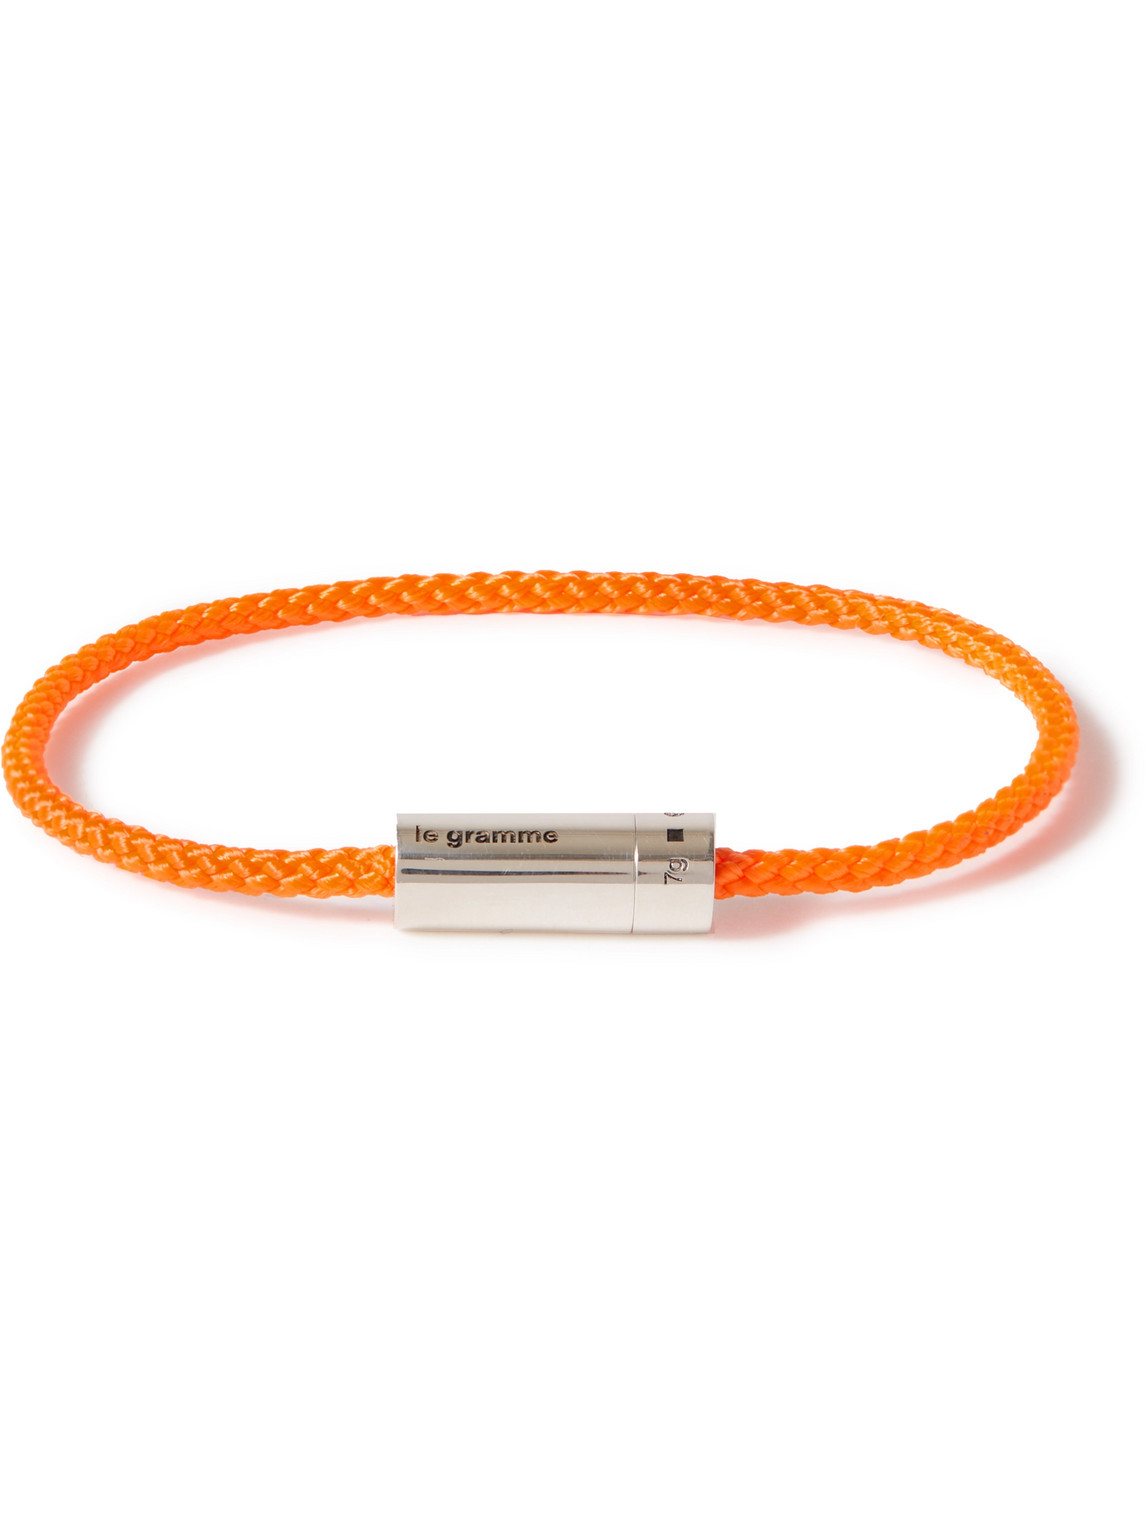 Le Gramme - 5g Braided Cord and Sterling Silver Bracelet - Men - Orange - 16 von Le Gramme